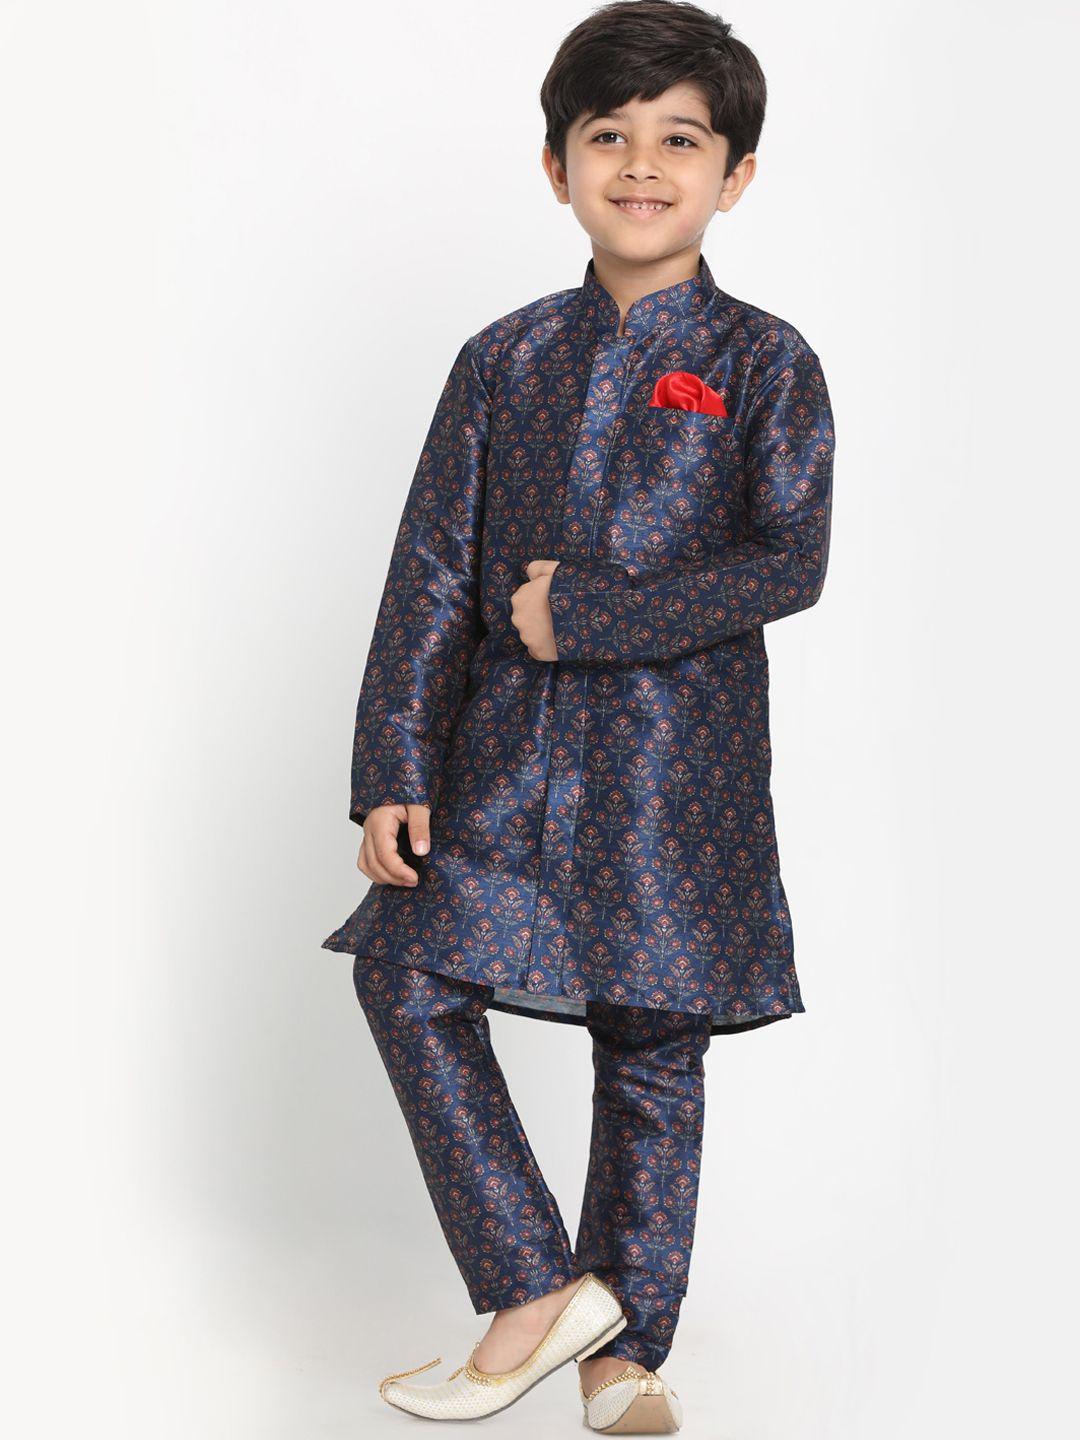 jbn creation boys blue & maroon printed kurta with pyjamas